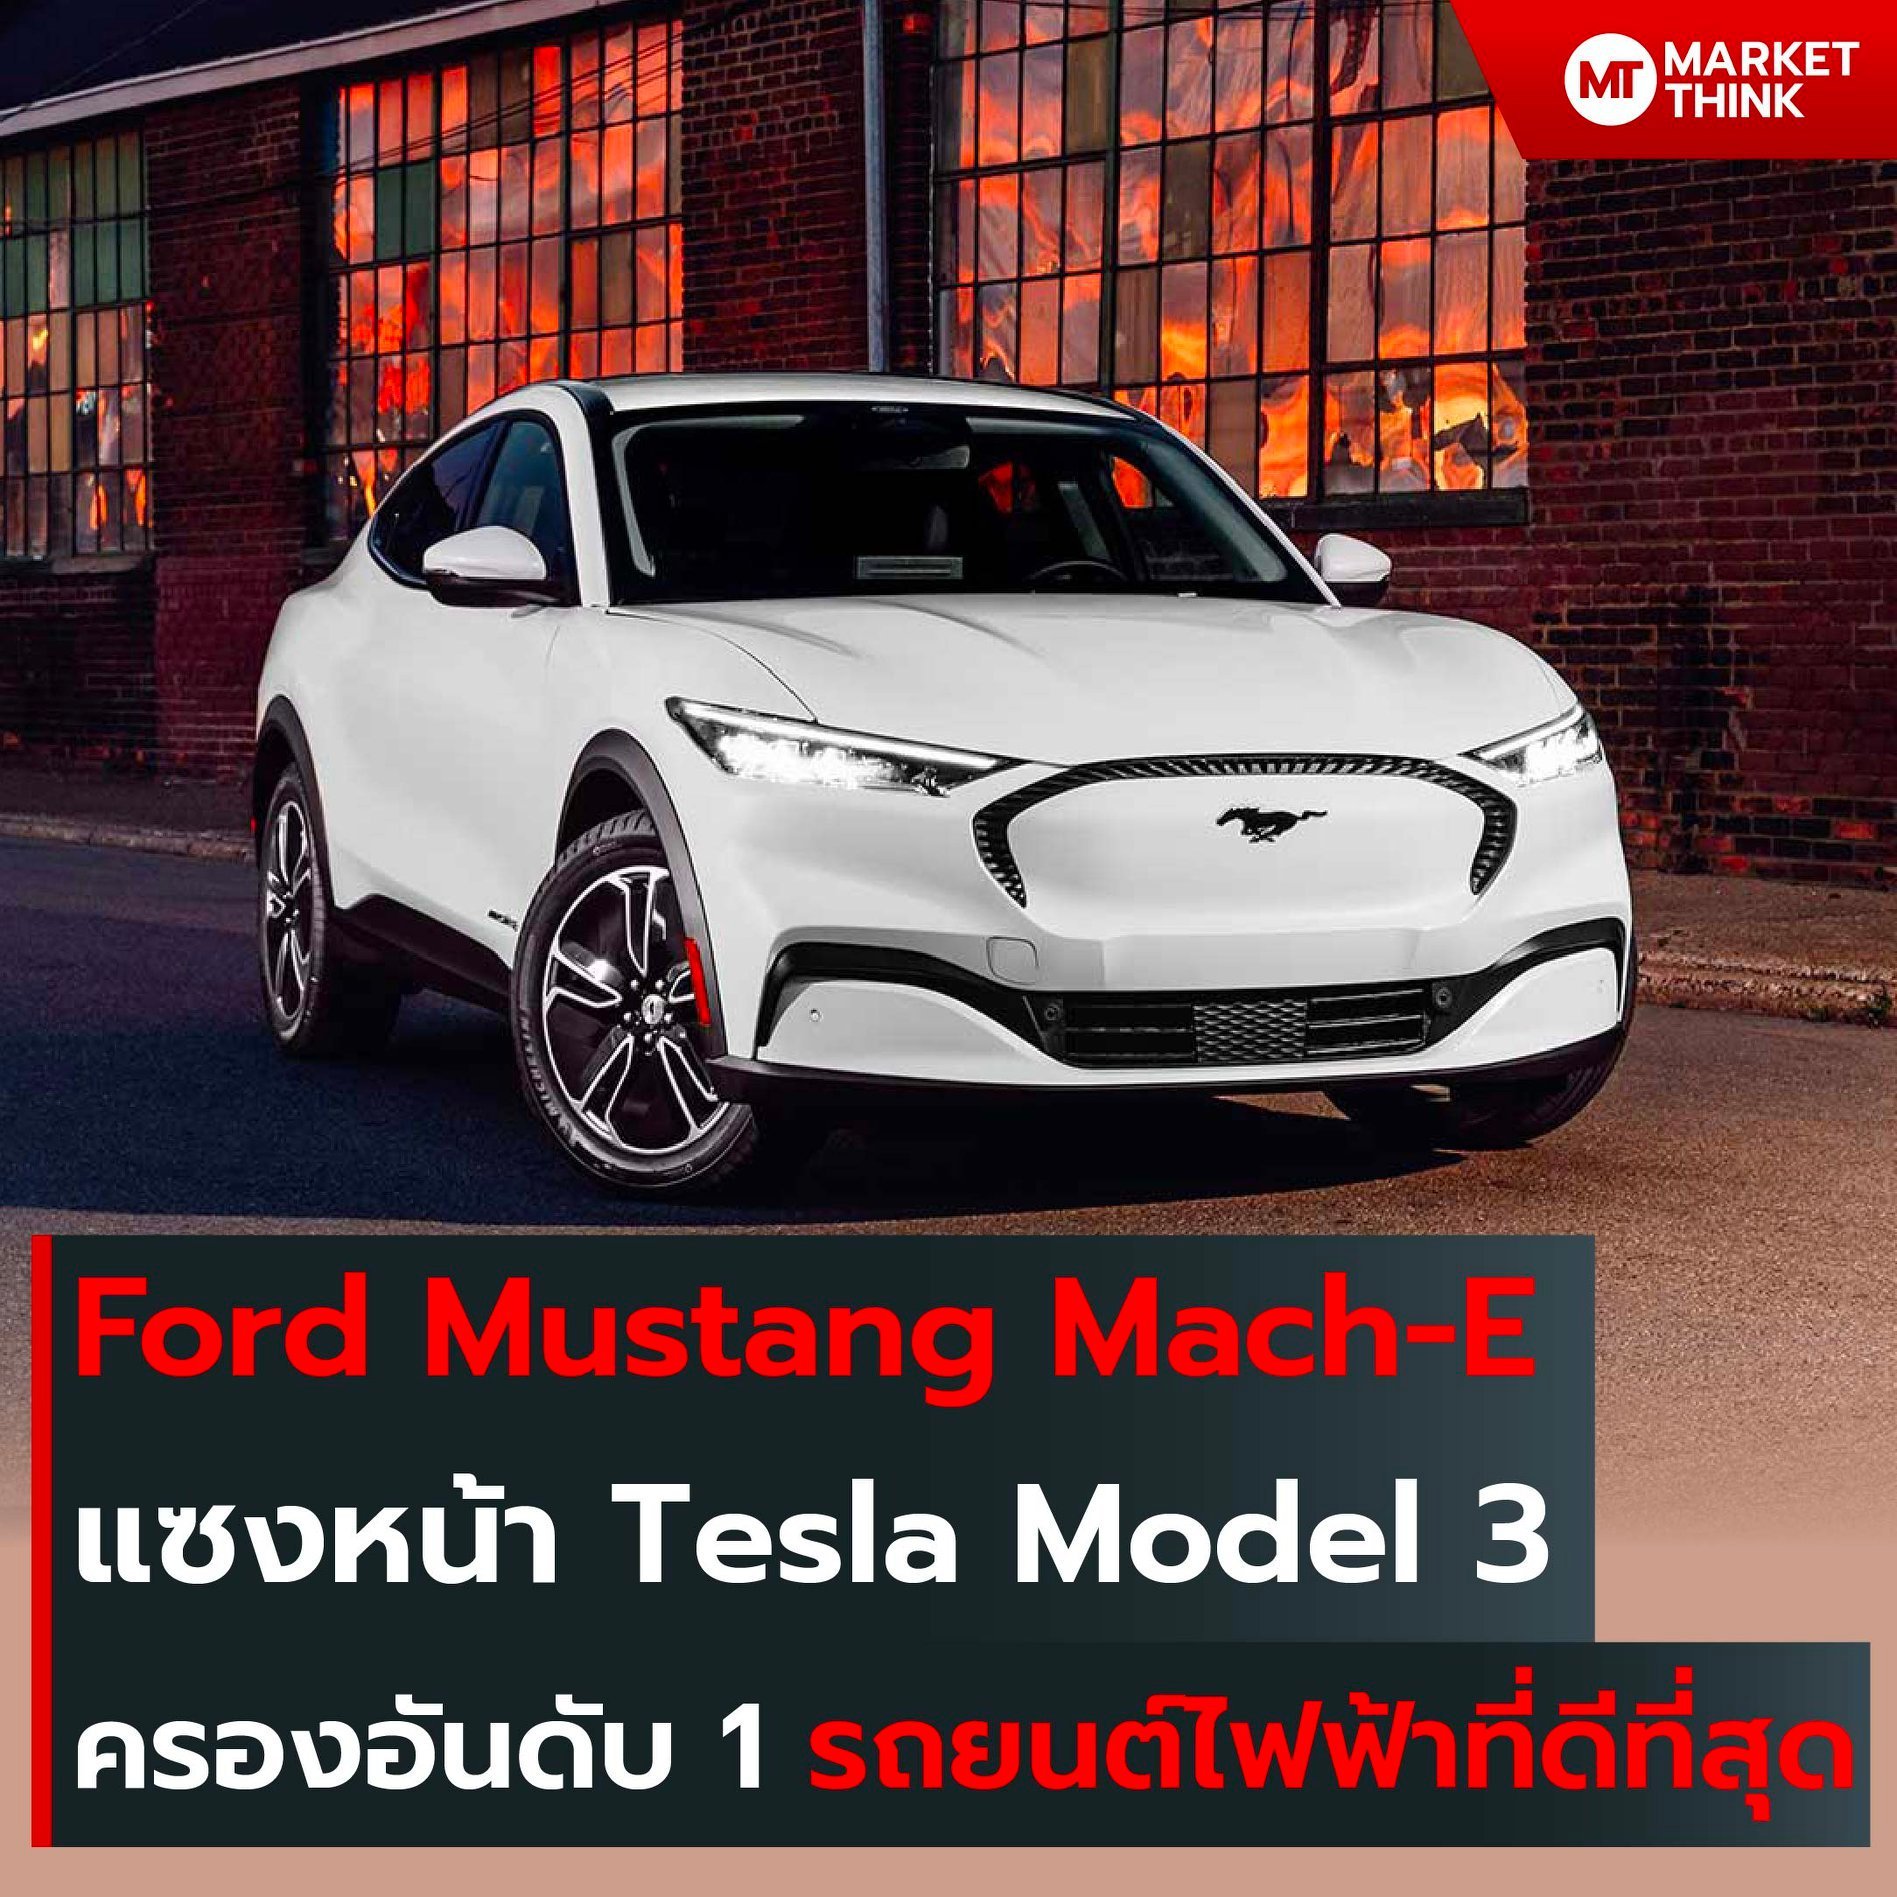 Ford Mustang Mach-E แซงหน้า Tesla Model 3 ครองอันดับ 1 รถยนต์ไฟฟ้าที่ดีที่สุด - MarketThink